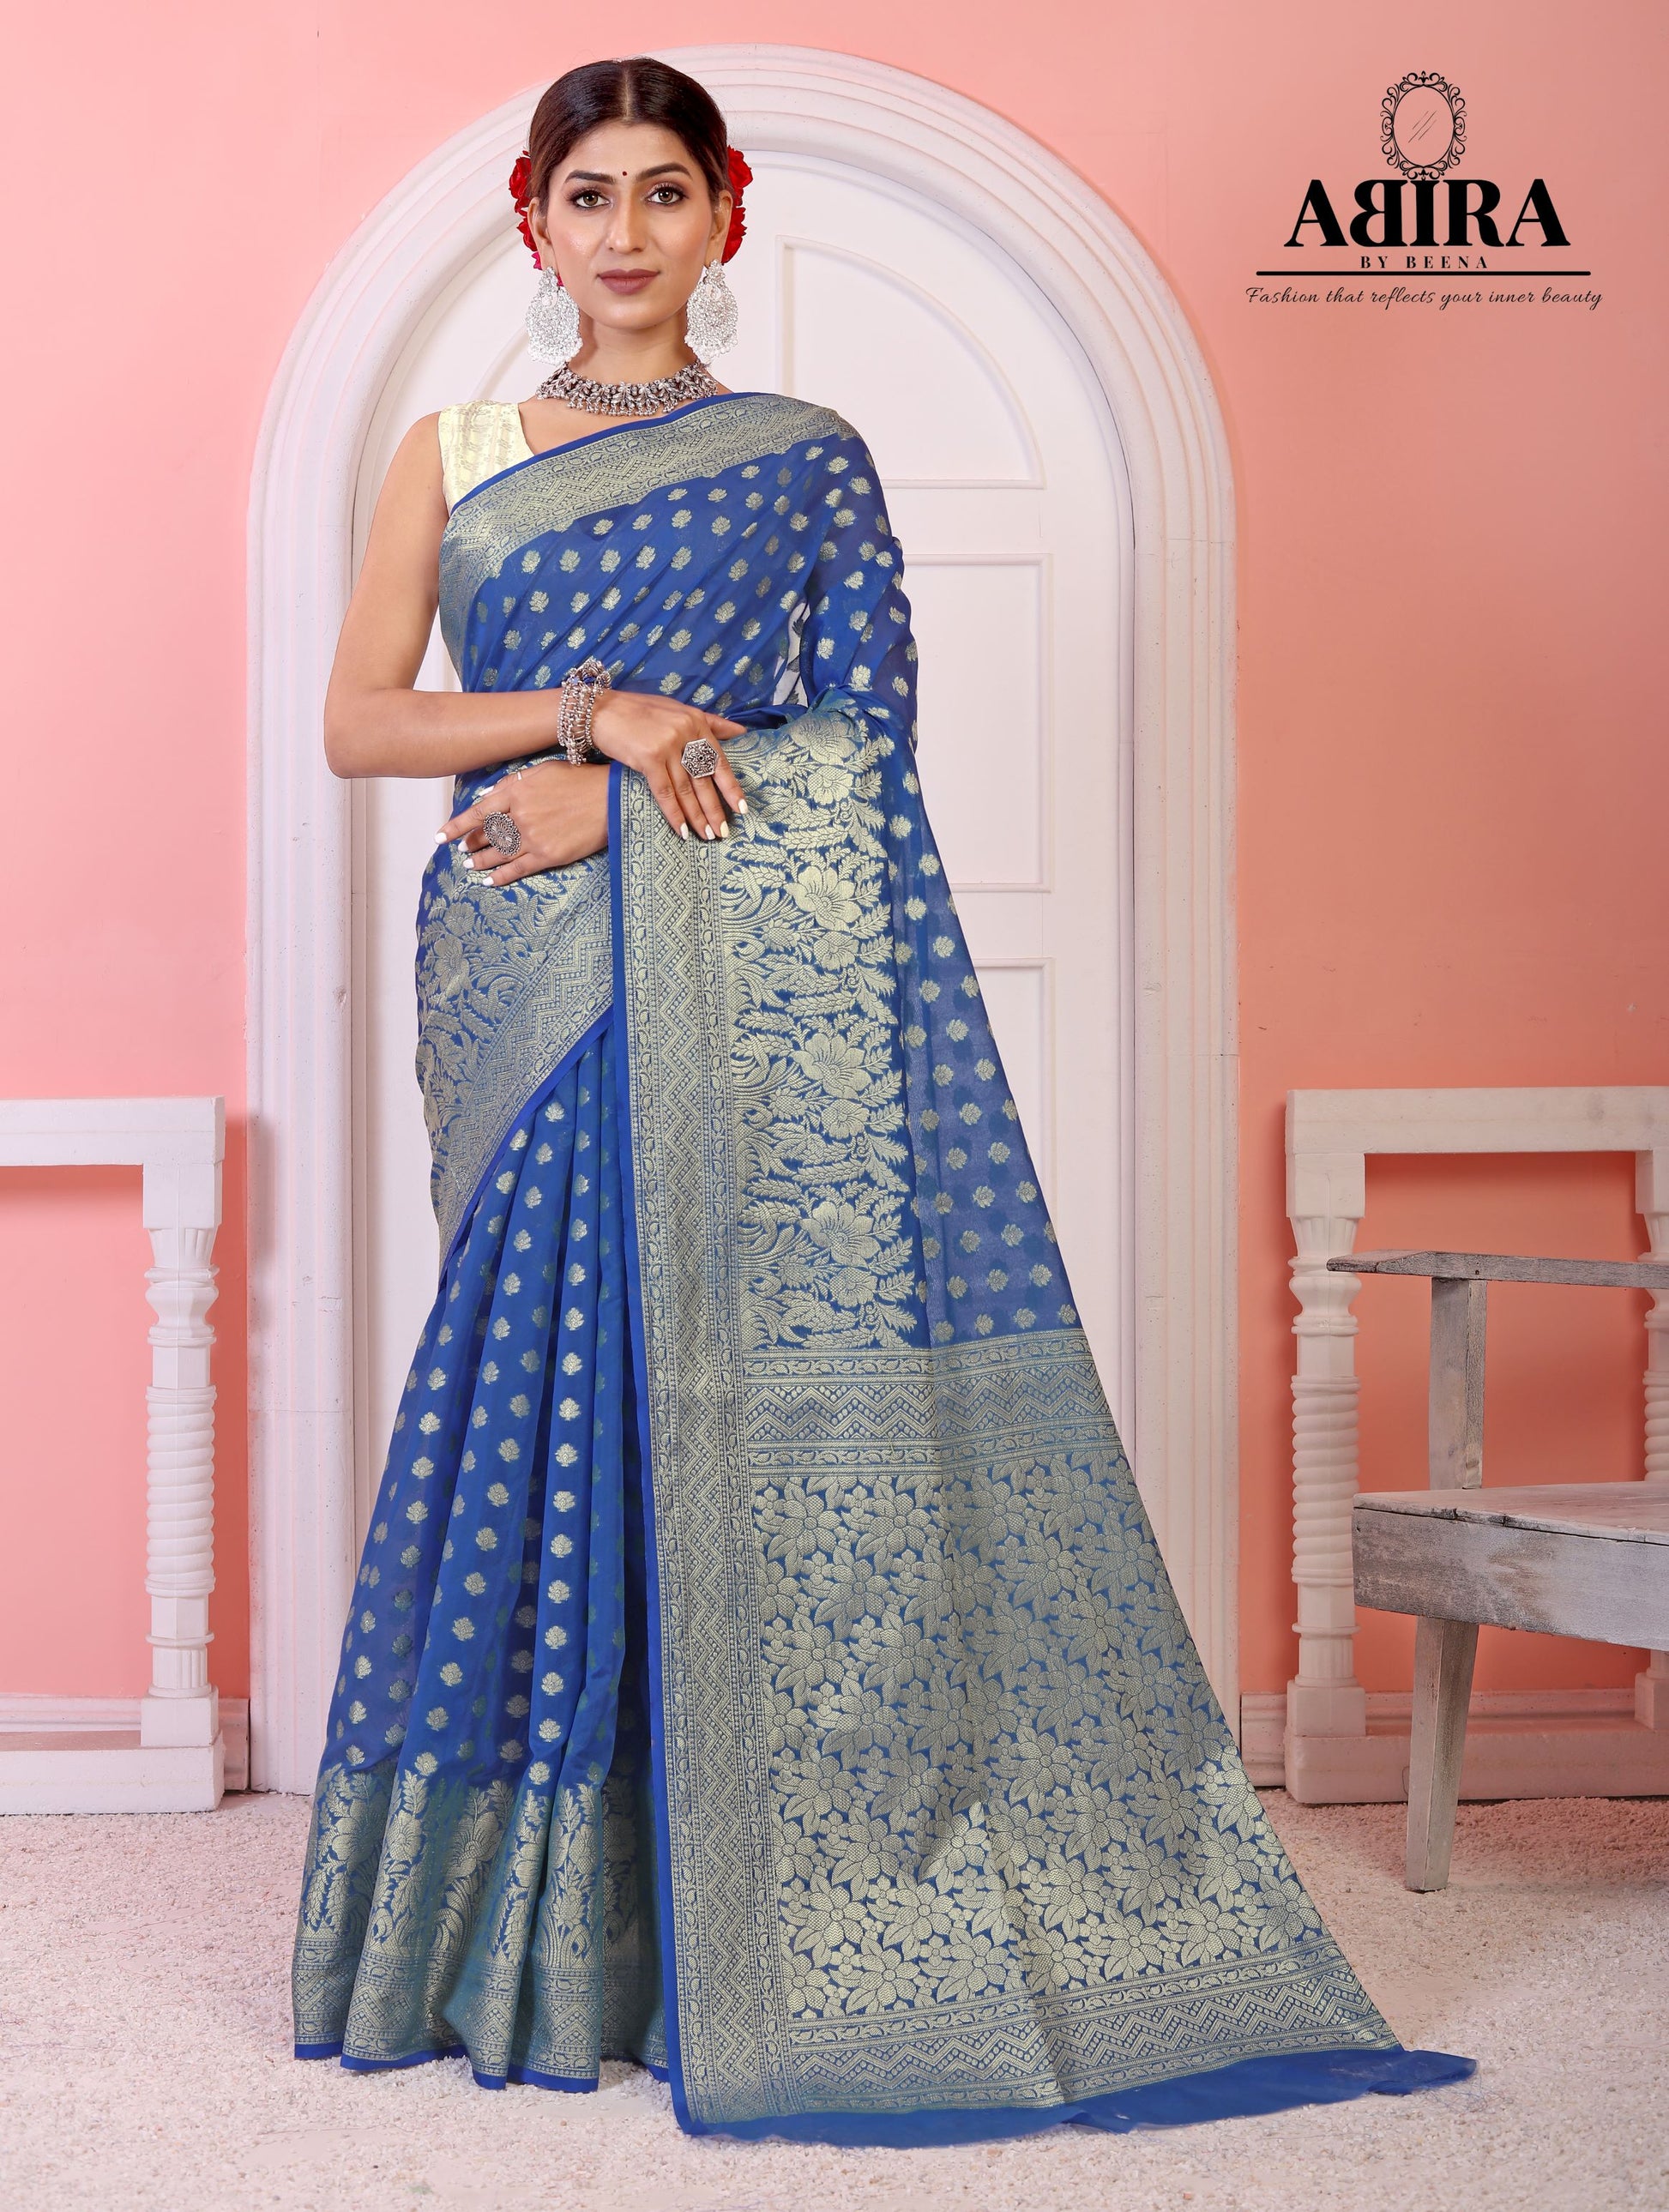 Blue Banaras Soft Georgette Silk - AbirabyBeena